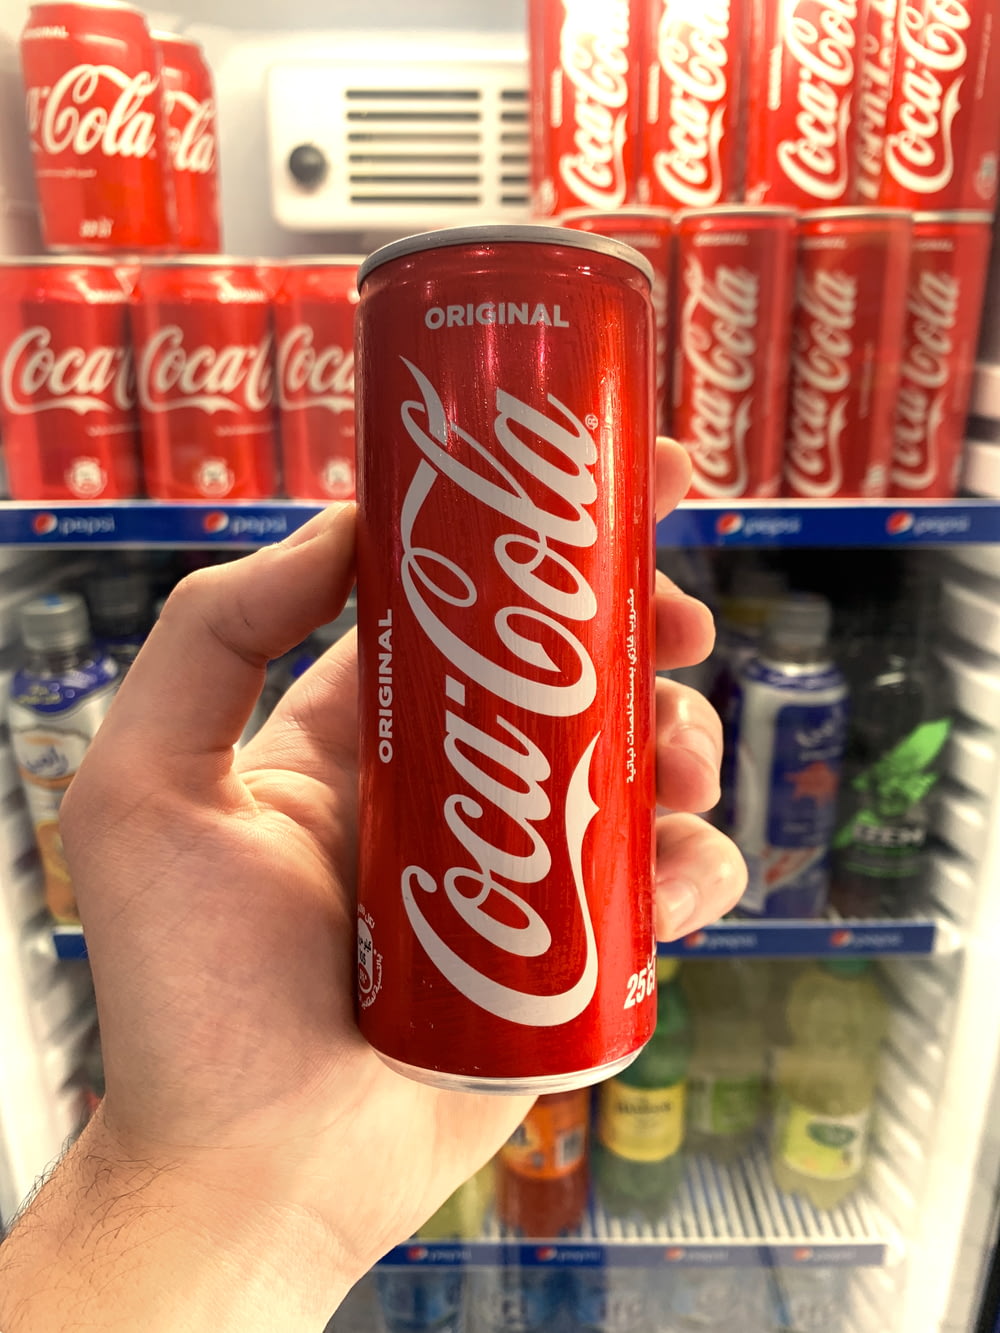 Coca-Cola soda can